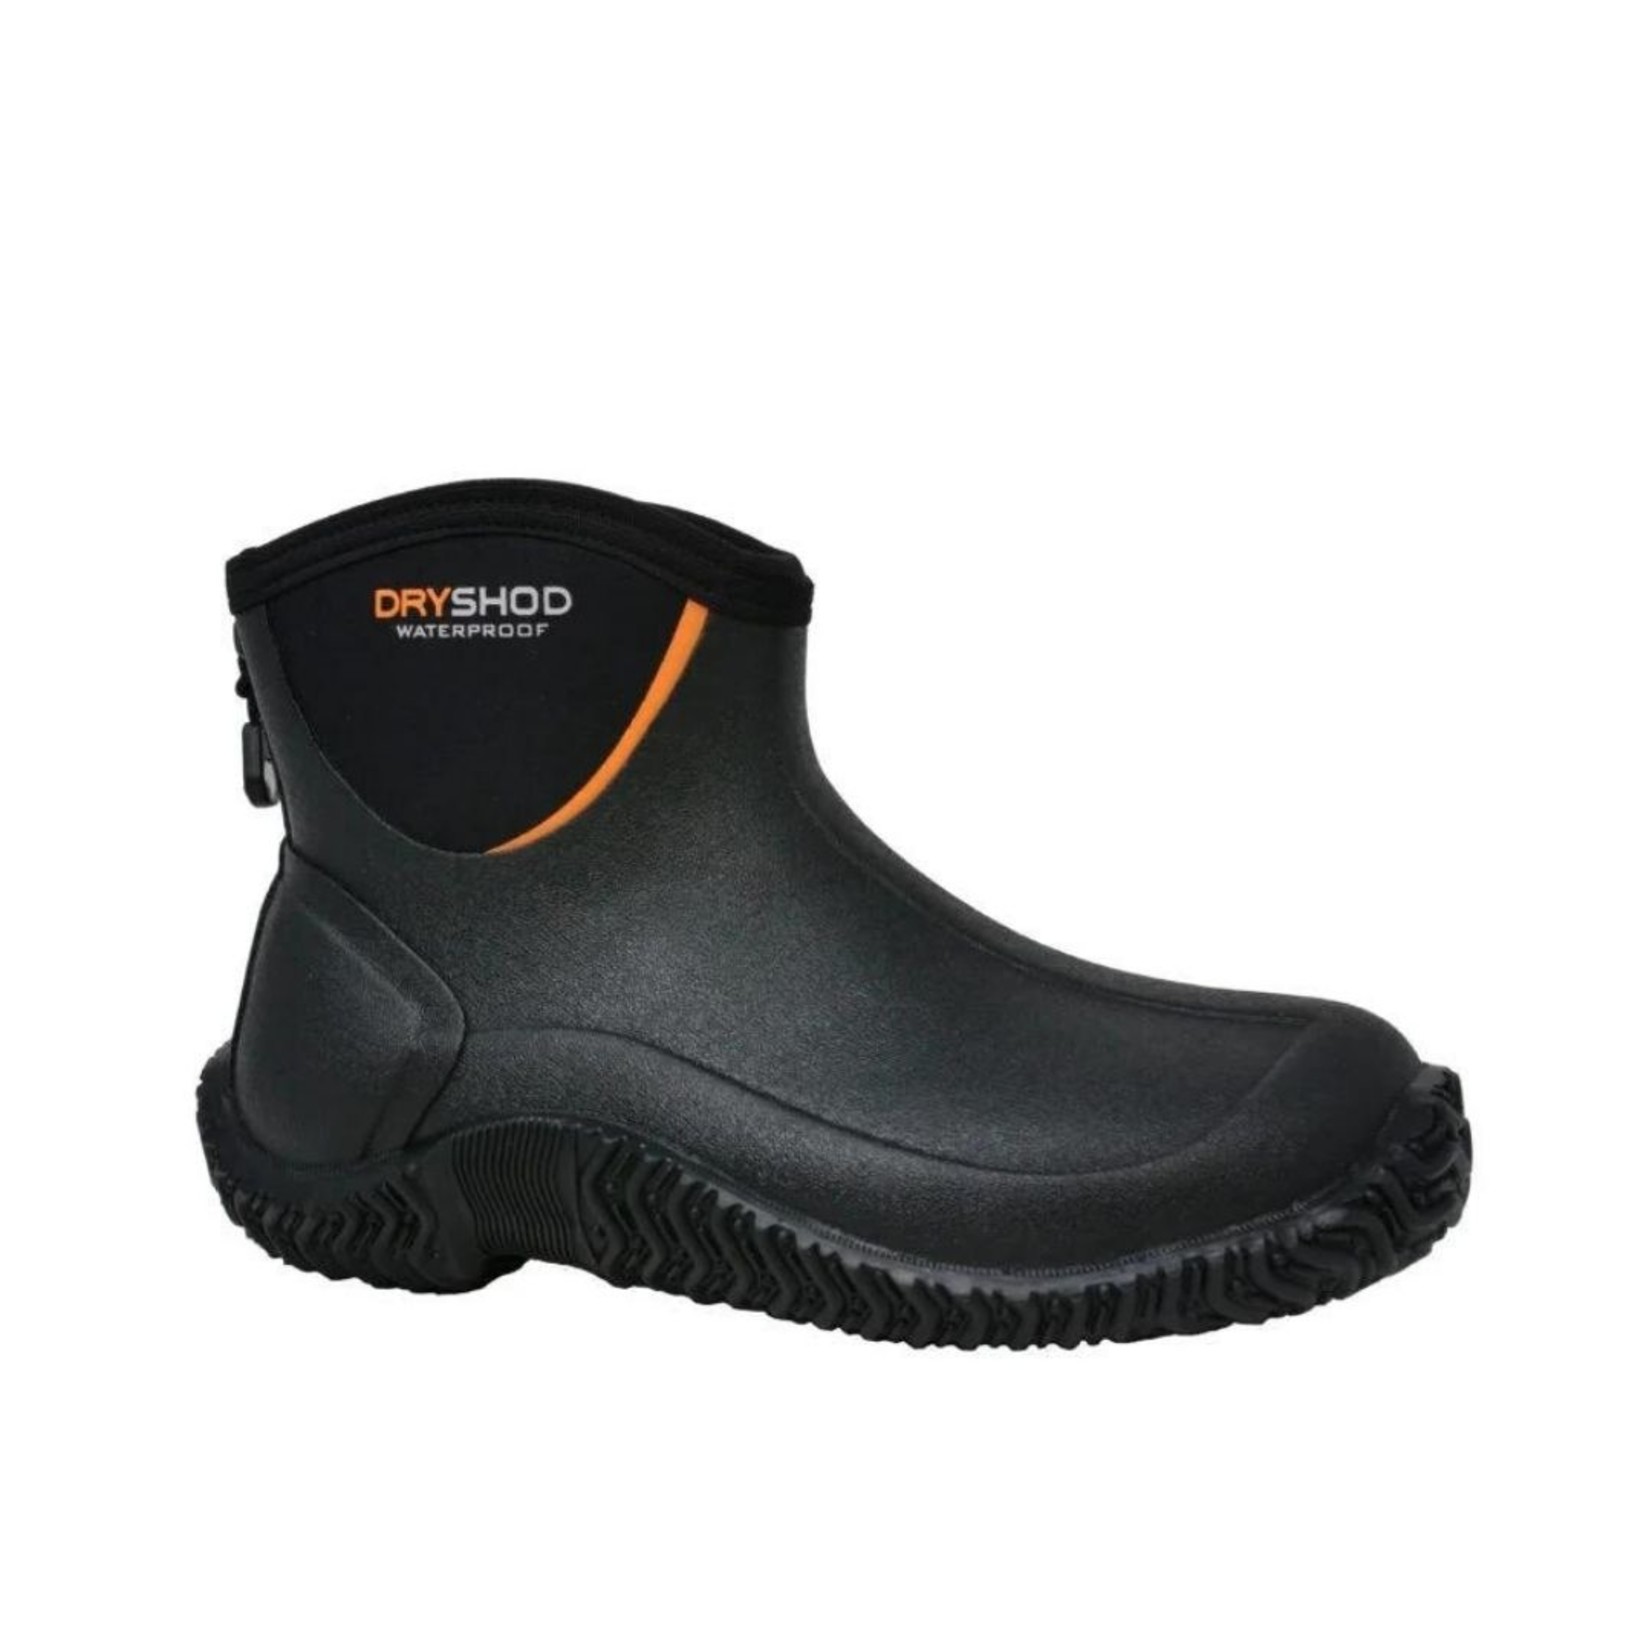 Dryshod DryShod Legend Ankle Boot Men’s Work Boots